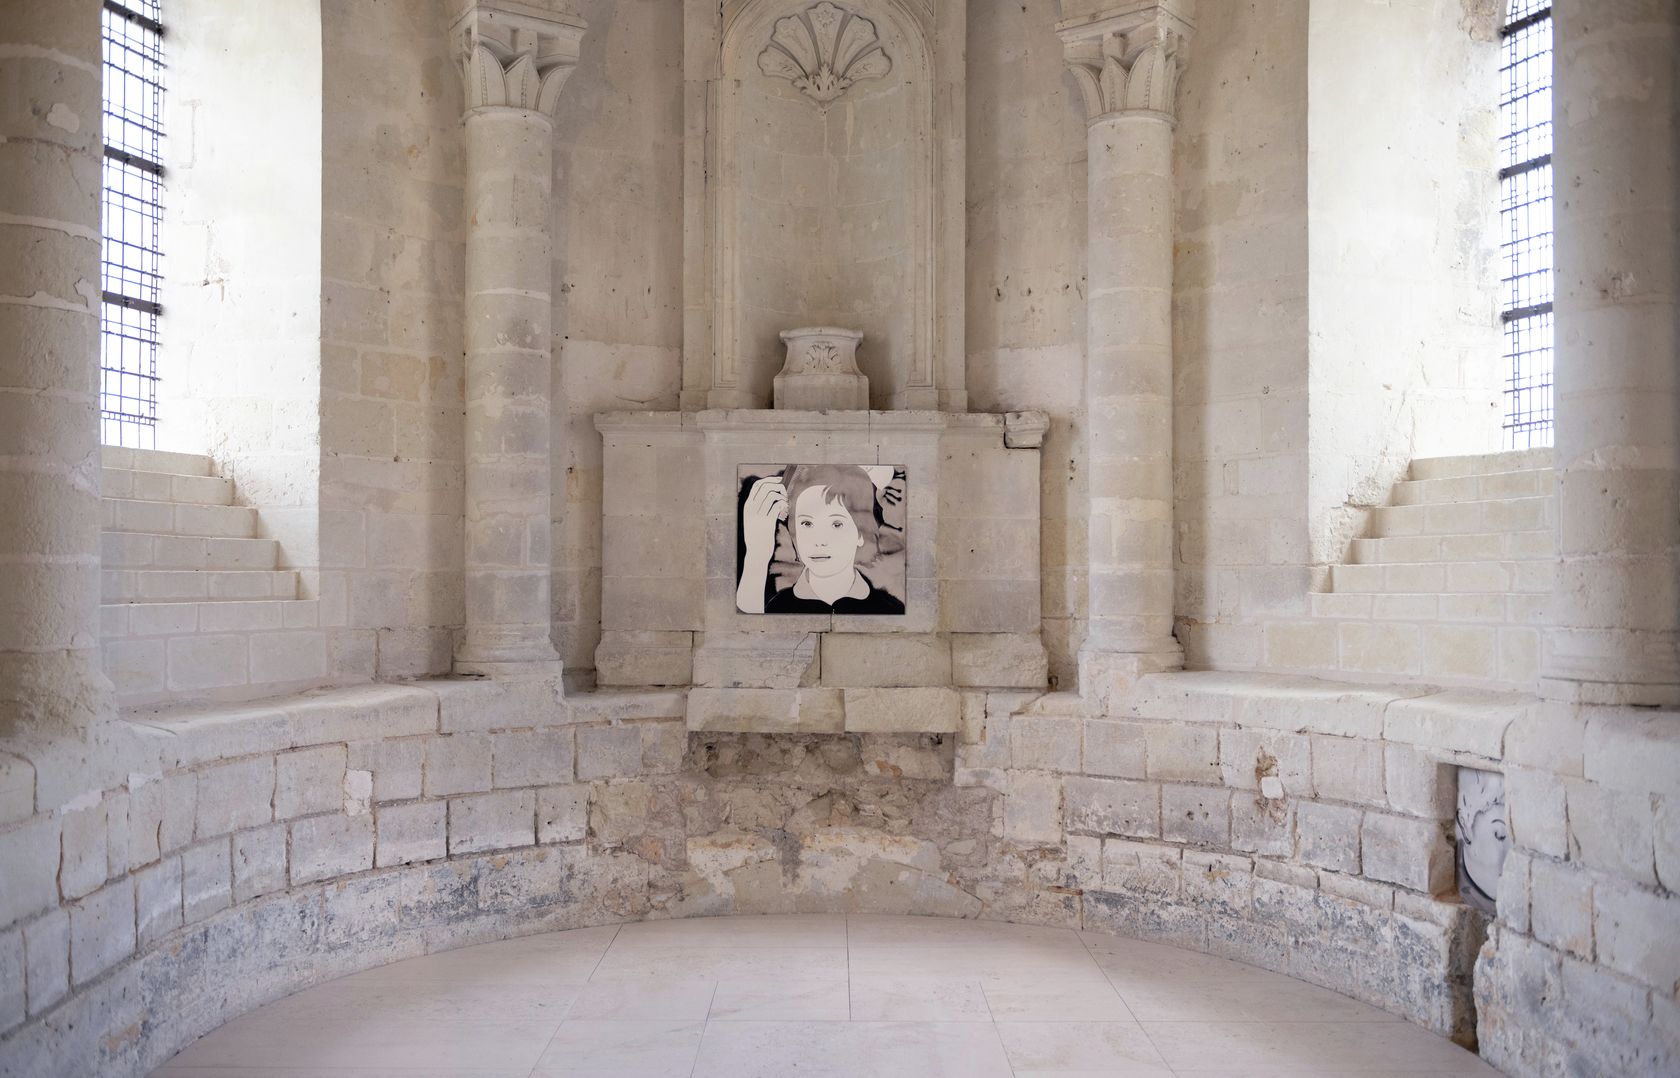 Françoise Pétrovitch Étendu Abbaye Royale de Fontevraud, Fontevraud-l'Abbaye (FR) 3 juin  &mdash; 18 septembre 2022